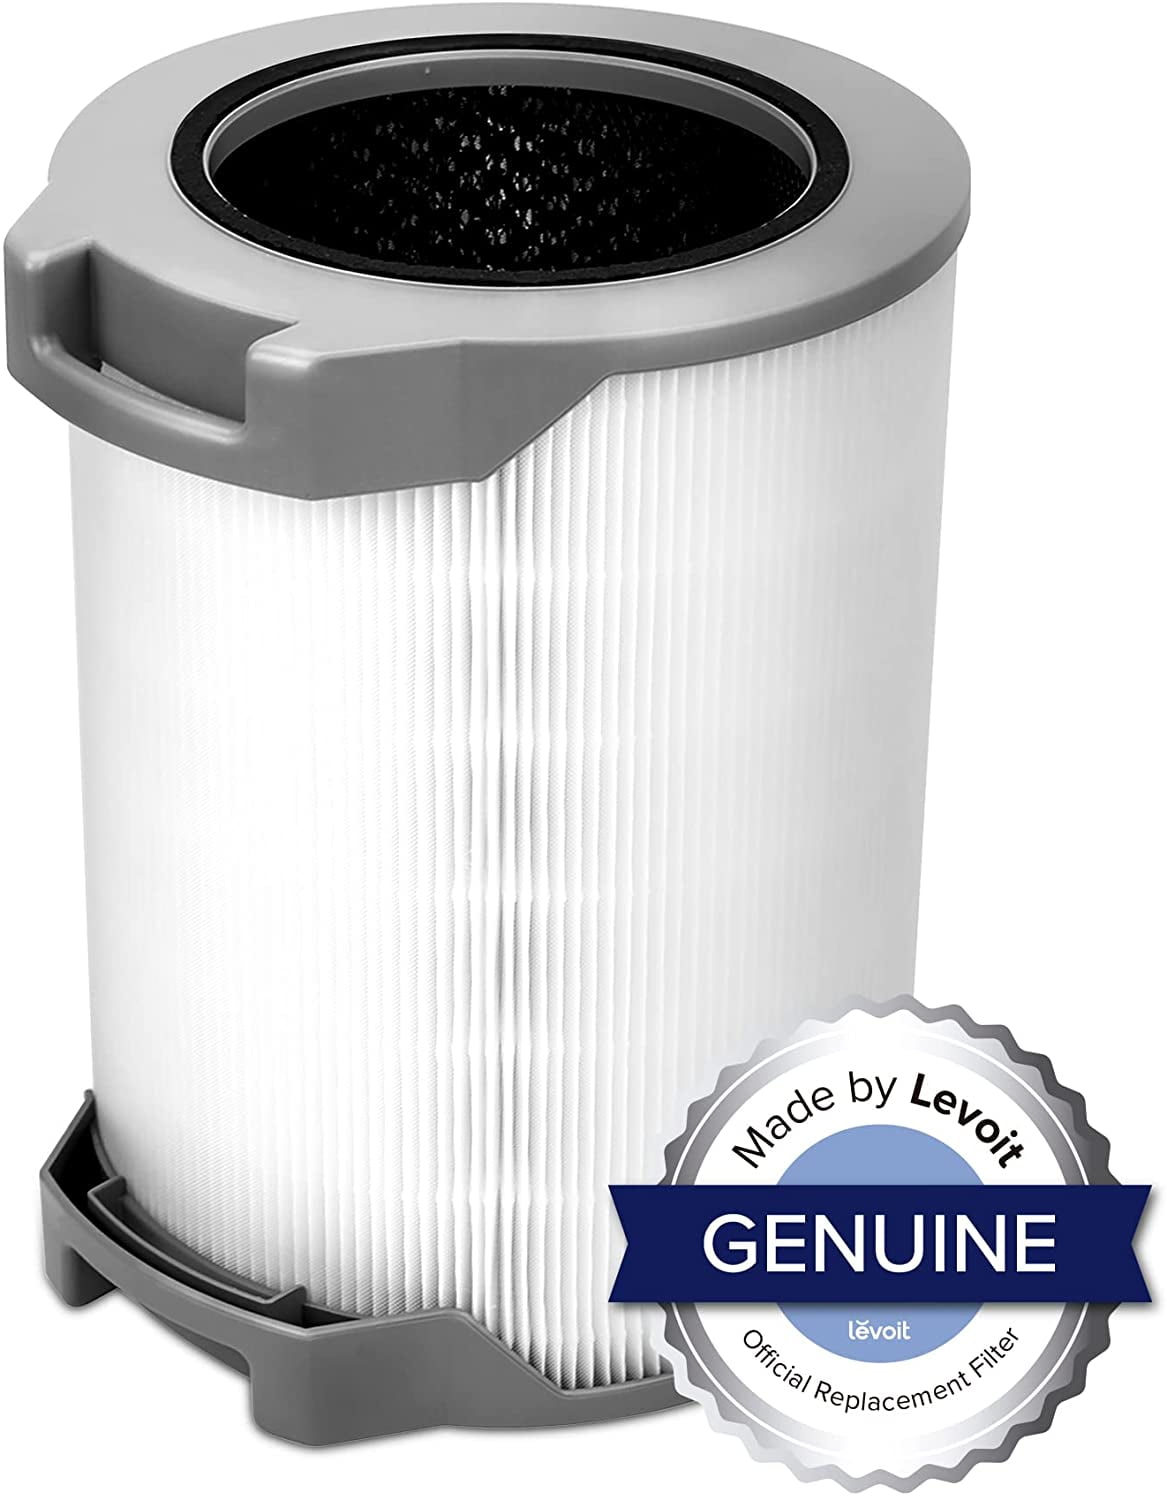 Levoit LV-H133-RF True HEPA Air Purifier Replacement Filter